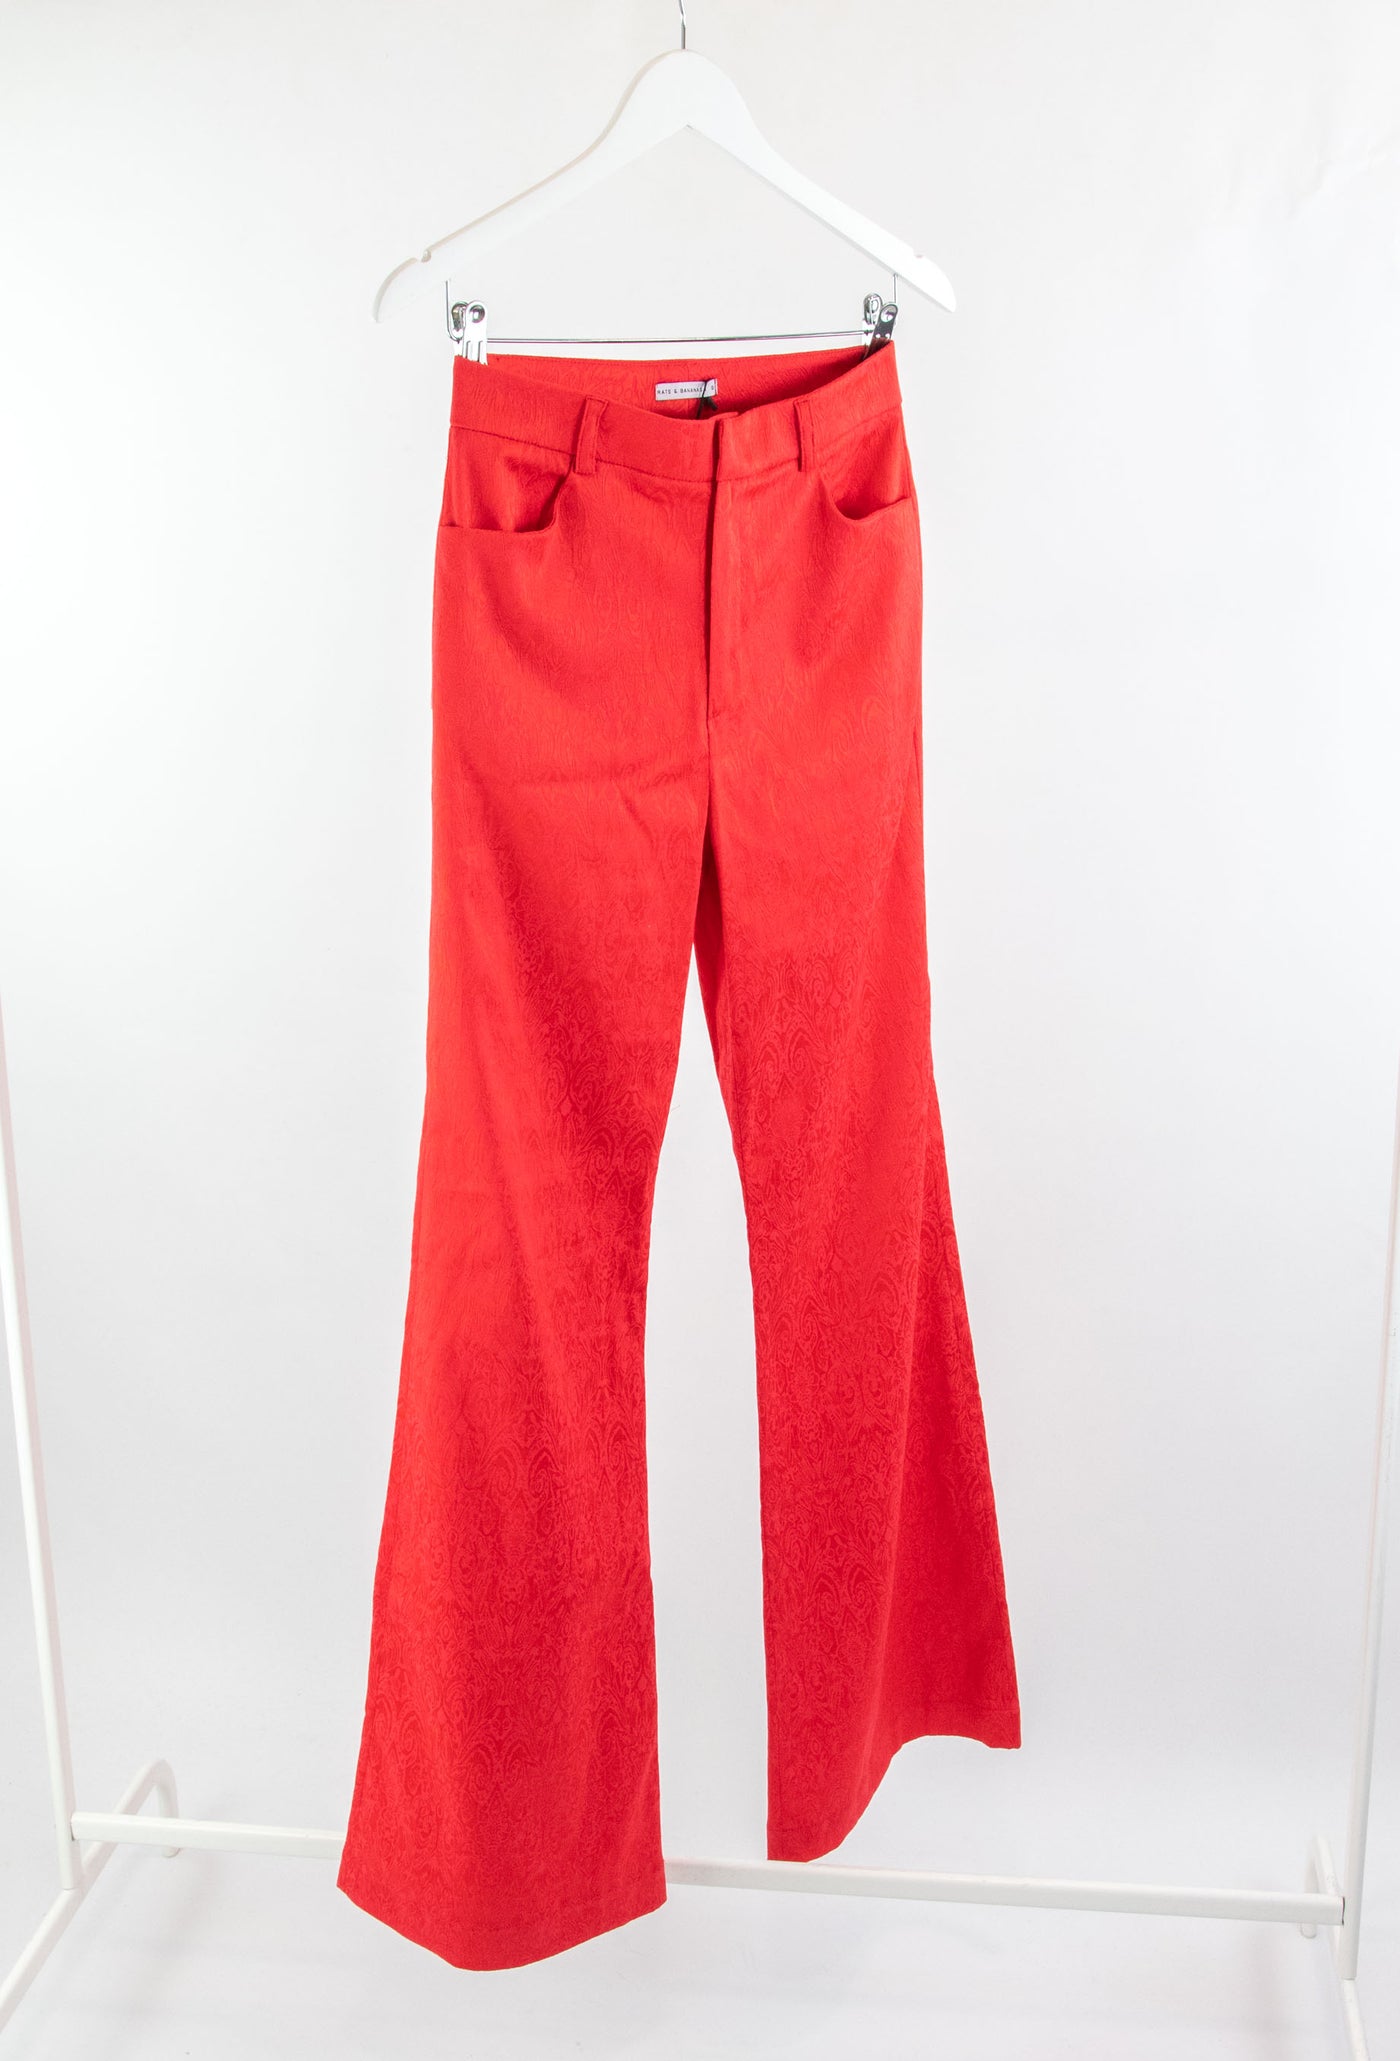 Pantalón rojo de vestir NUEVO